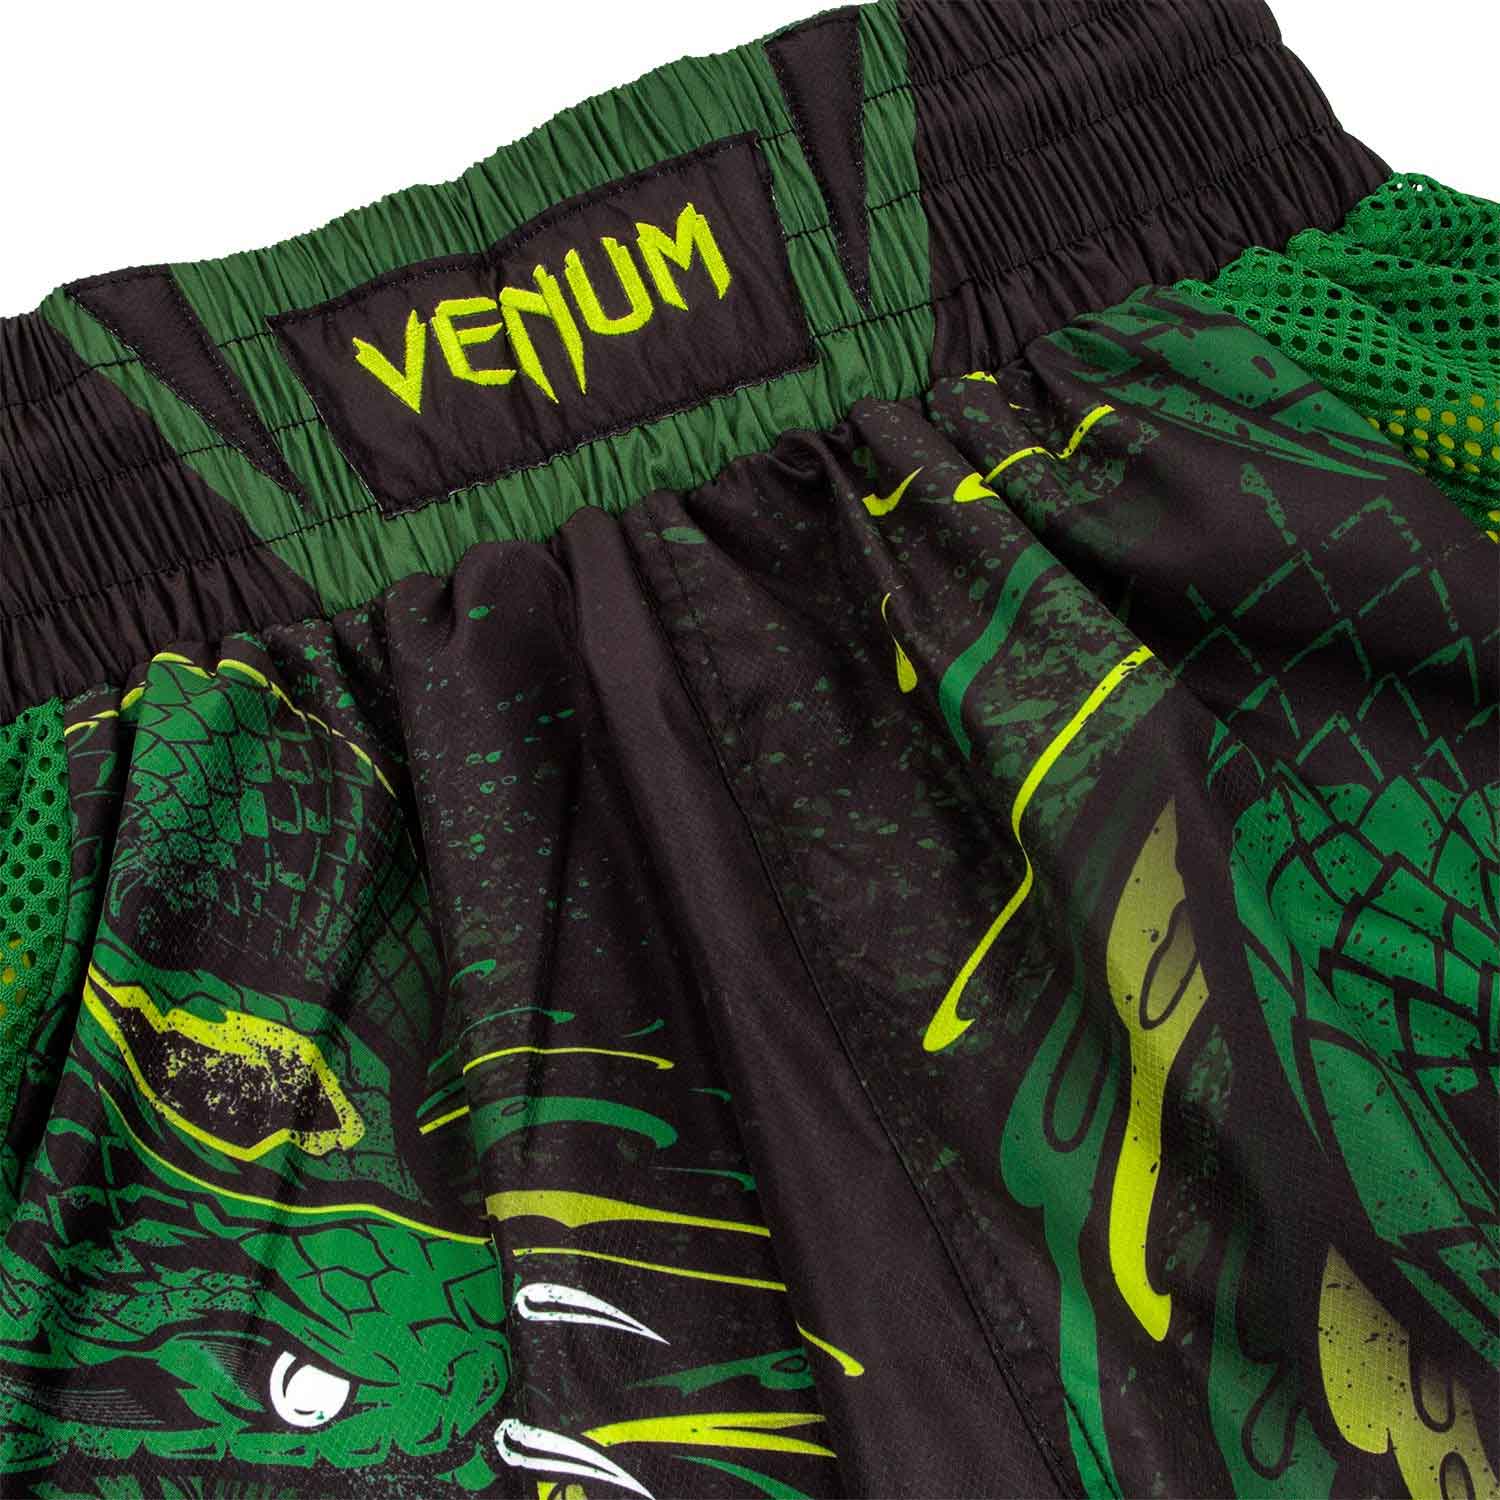 VENUM／ヴェナム　ボクシングショーツ　　GREEN VIPER BOXING SHORTS／グリーン・ヴァイパー ボクシングショーツ